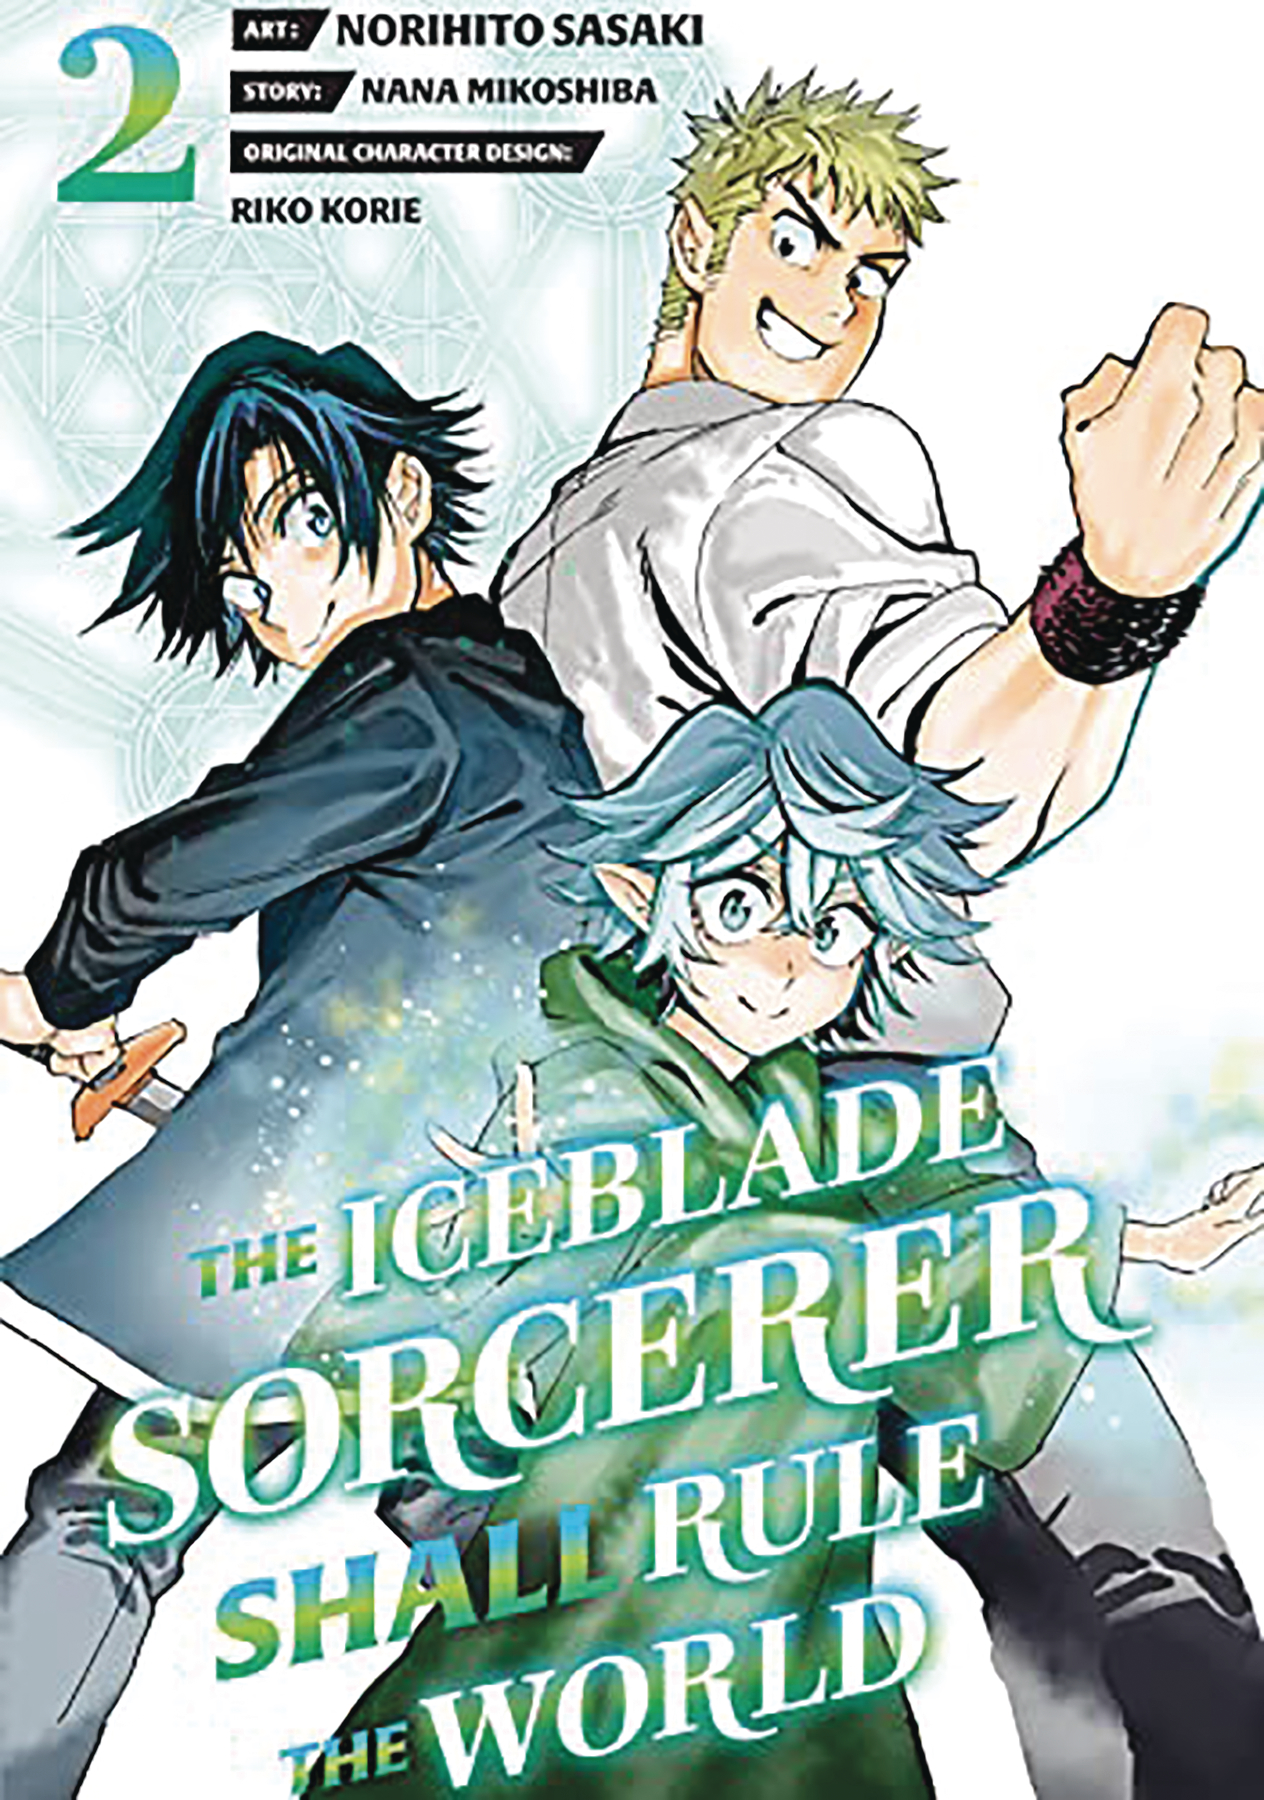 The Iceblade Sorcerer Shall Rule the World Manga Volume 2